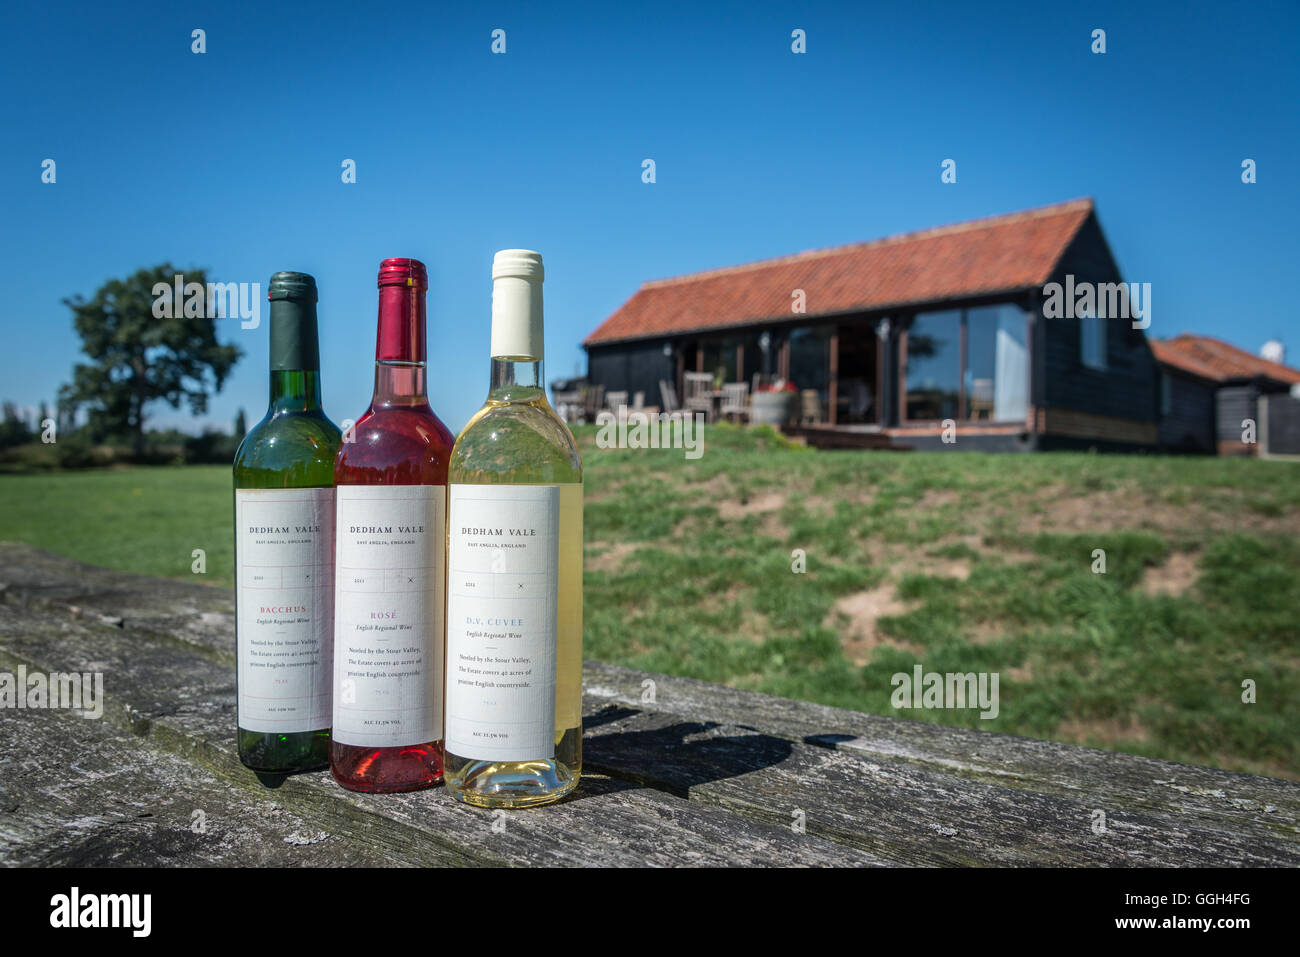 Carter's Farm Vineyard – now known as Dedham Vale vineyard Stock Photo